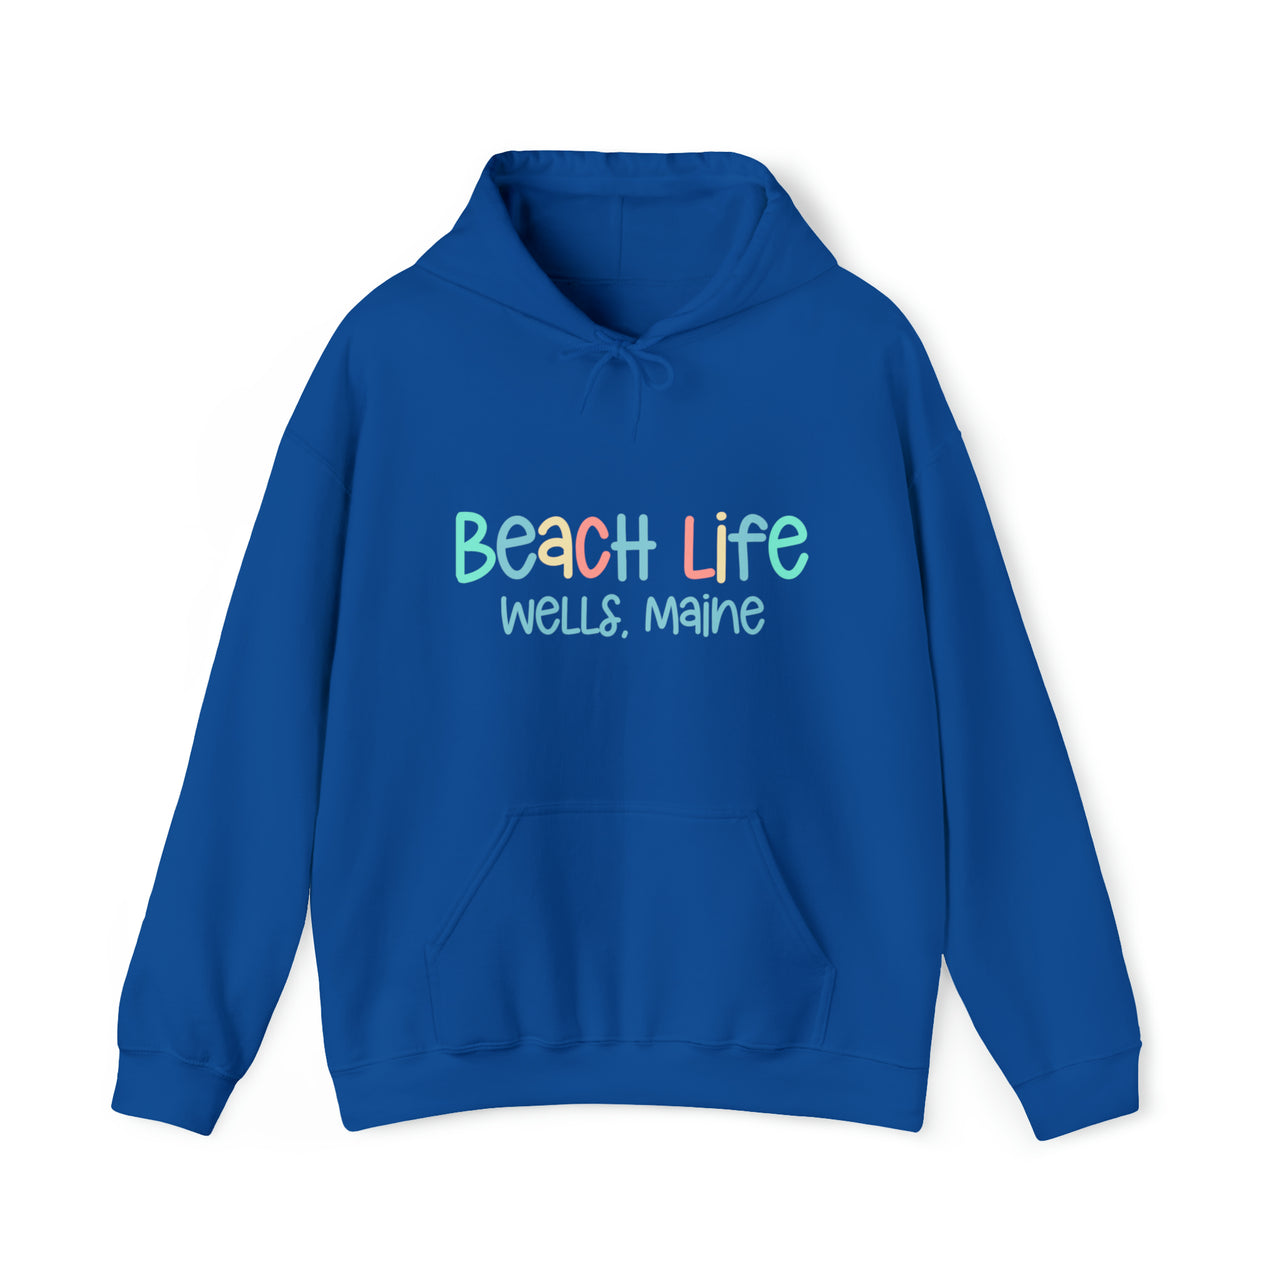 Beach Life Heavy Blend Hooded Sweatshirt, Personalized, Royal